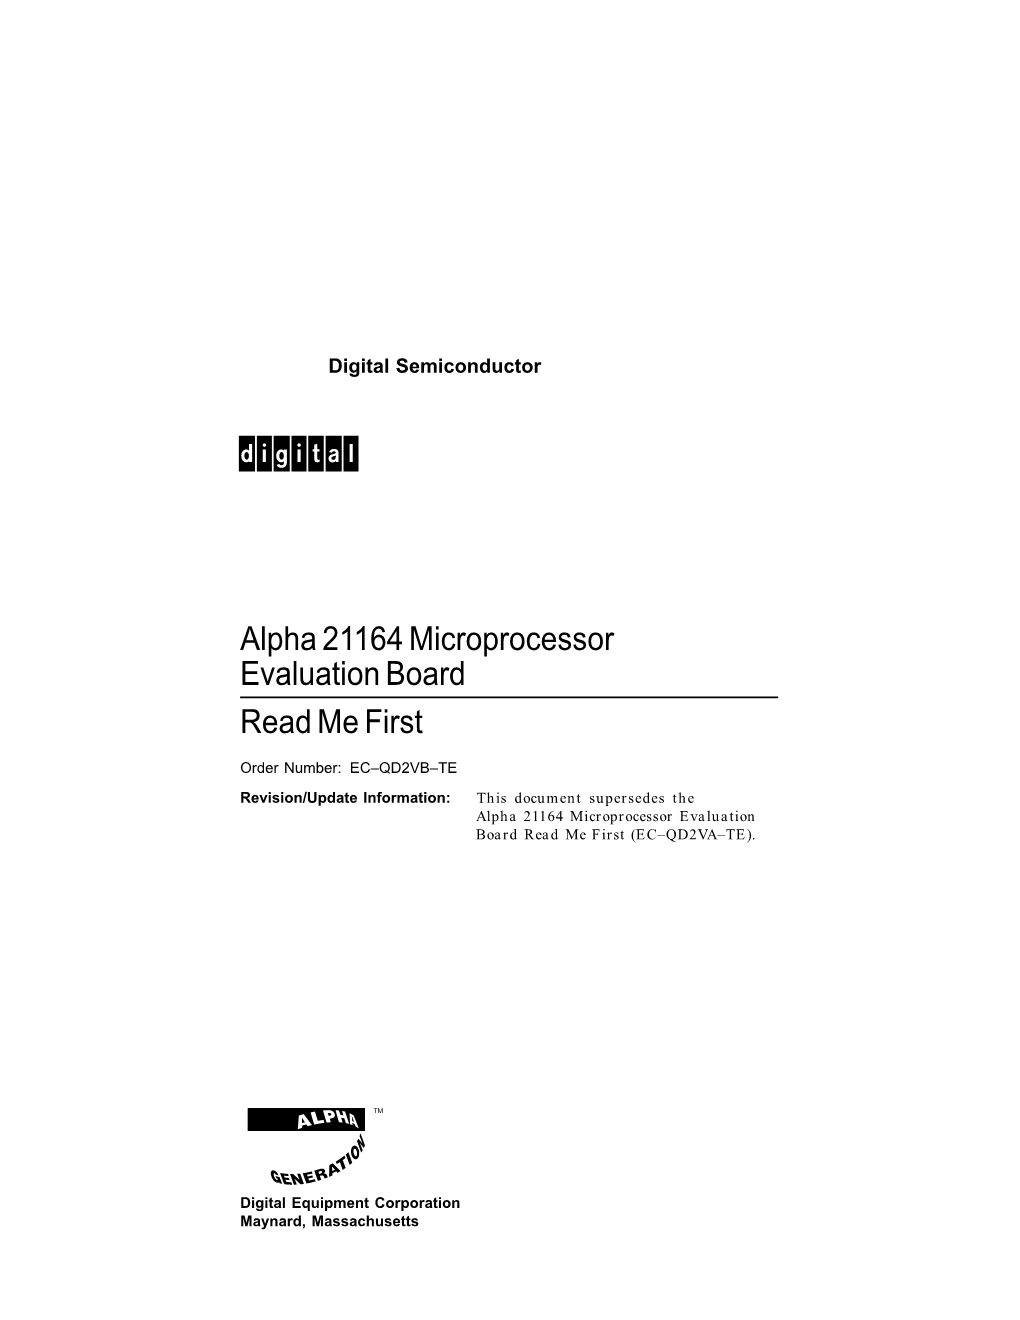 Alpha 21164 Microprocessor Evaluation Board Read Me First